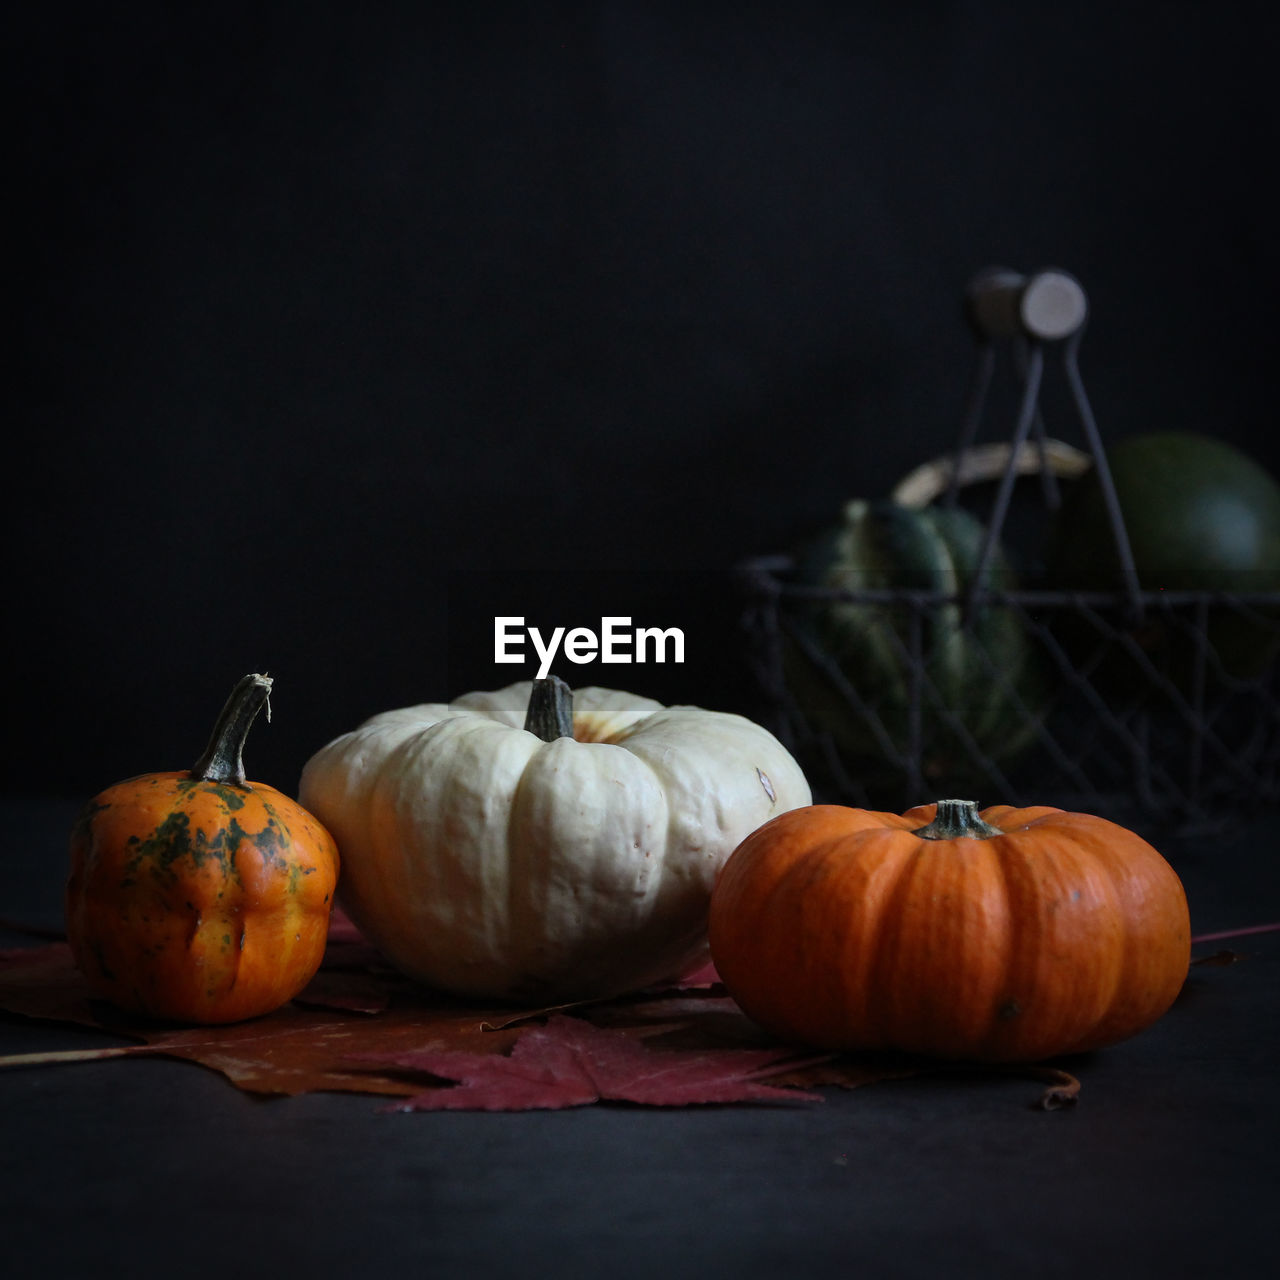 Pumpkins on table against black background